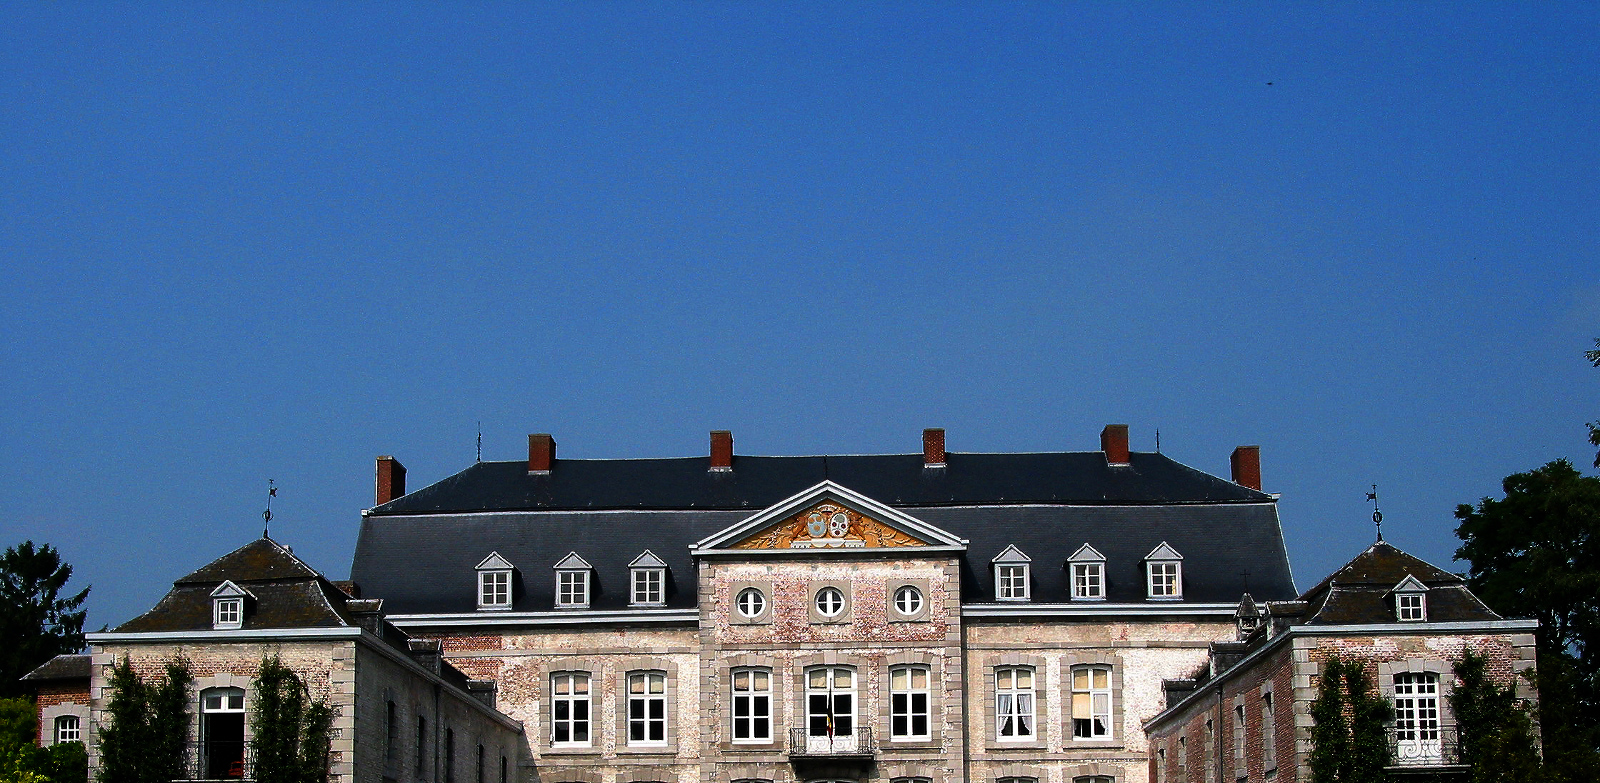 Stately mansion against a dark blue sky